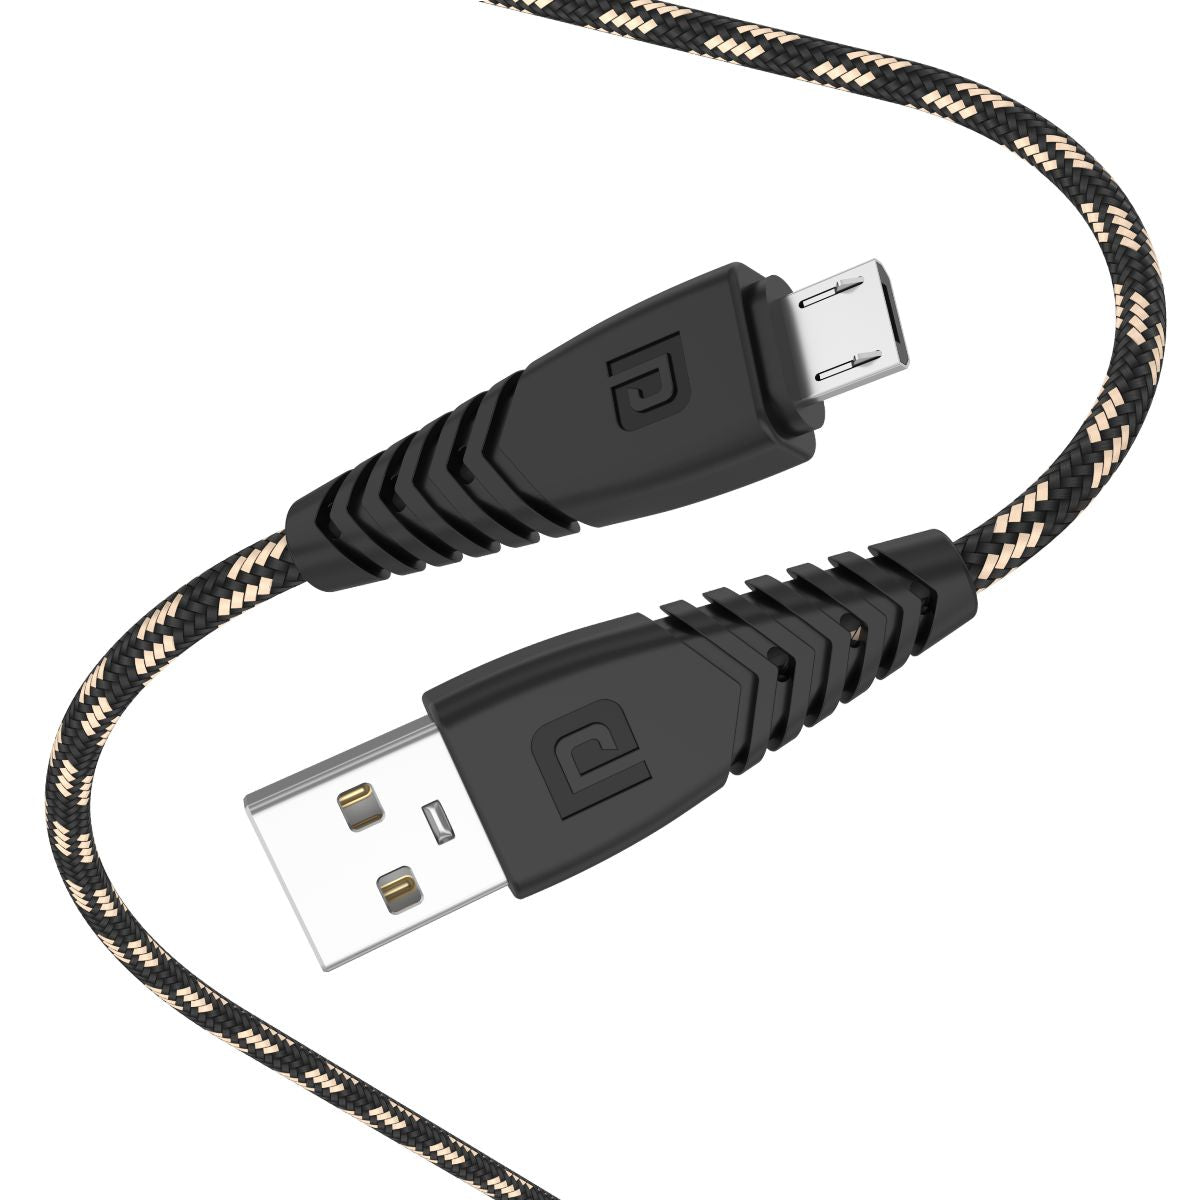 PORTRONICS-Konnect Spydr Micro USB Cable